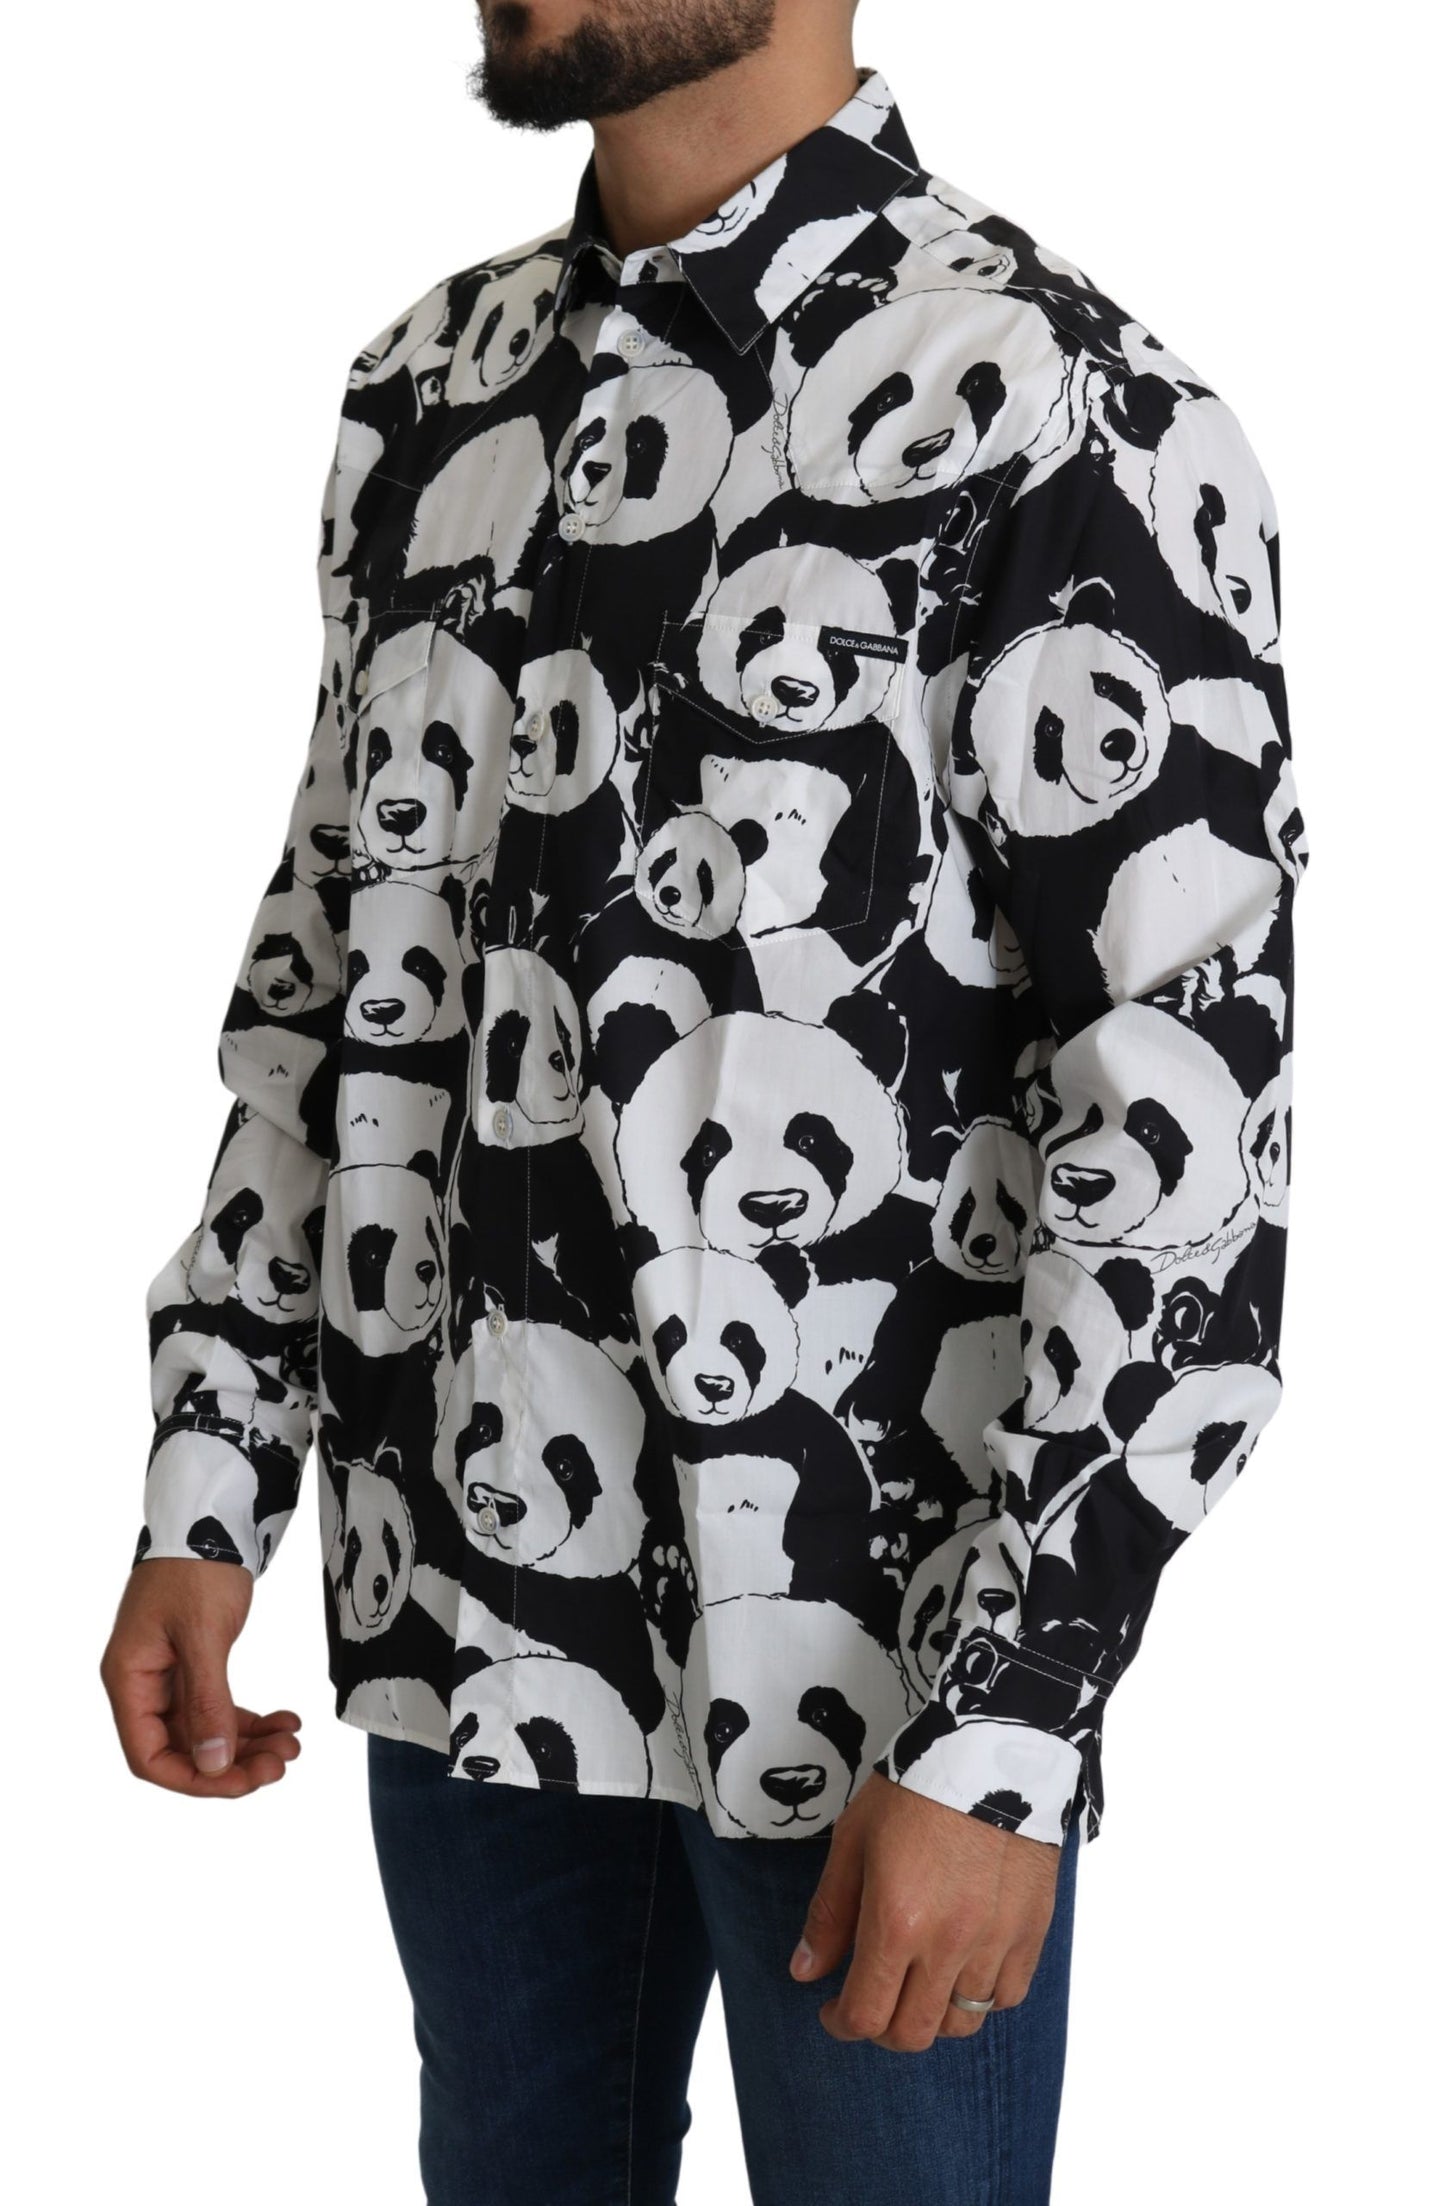 Dolce & Gabbana Panda Print Pure Cotton Shirt - Black White